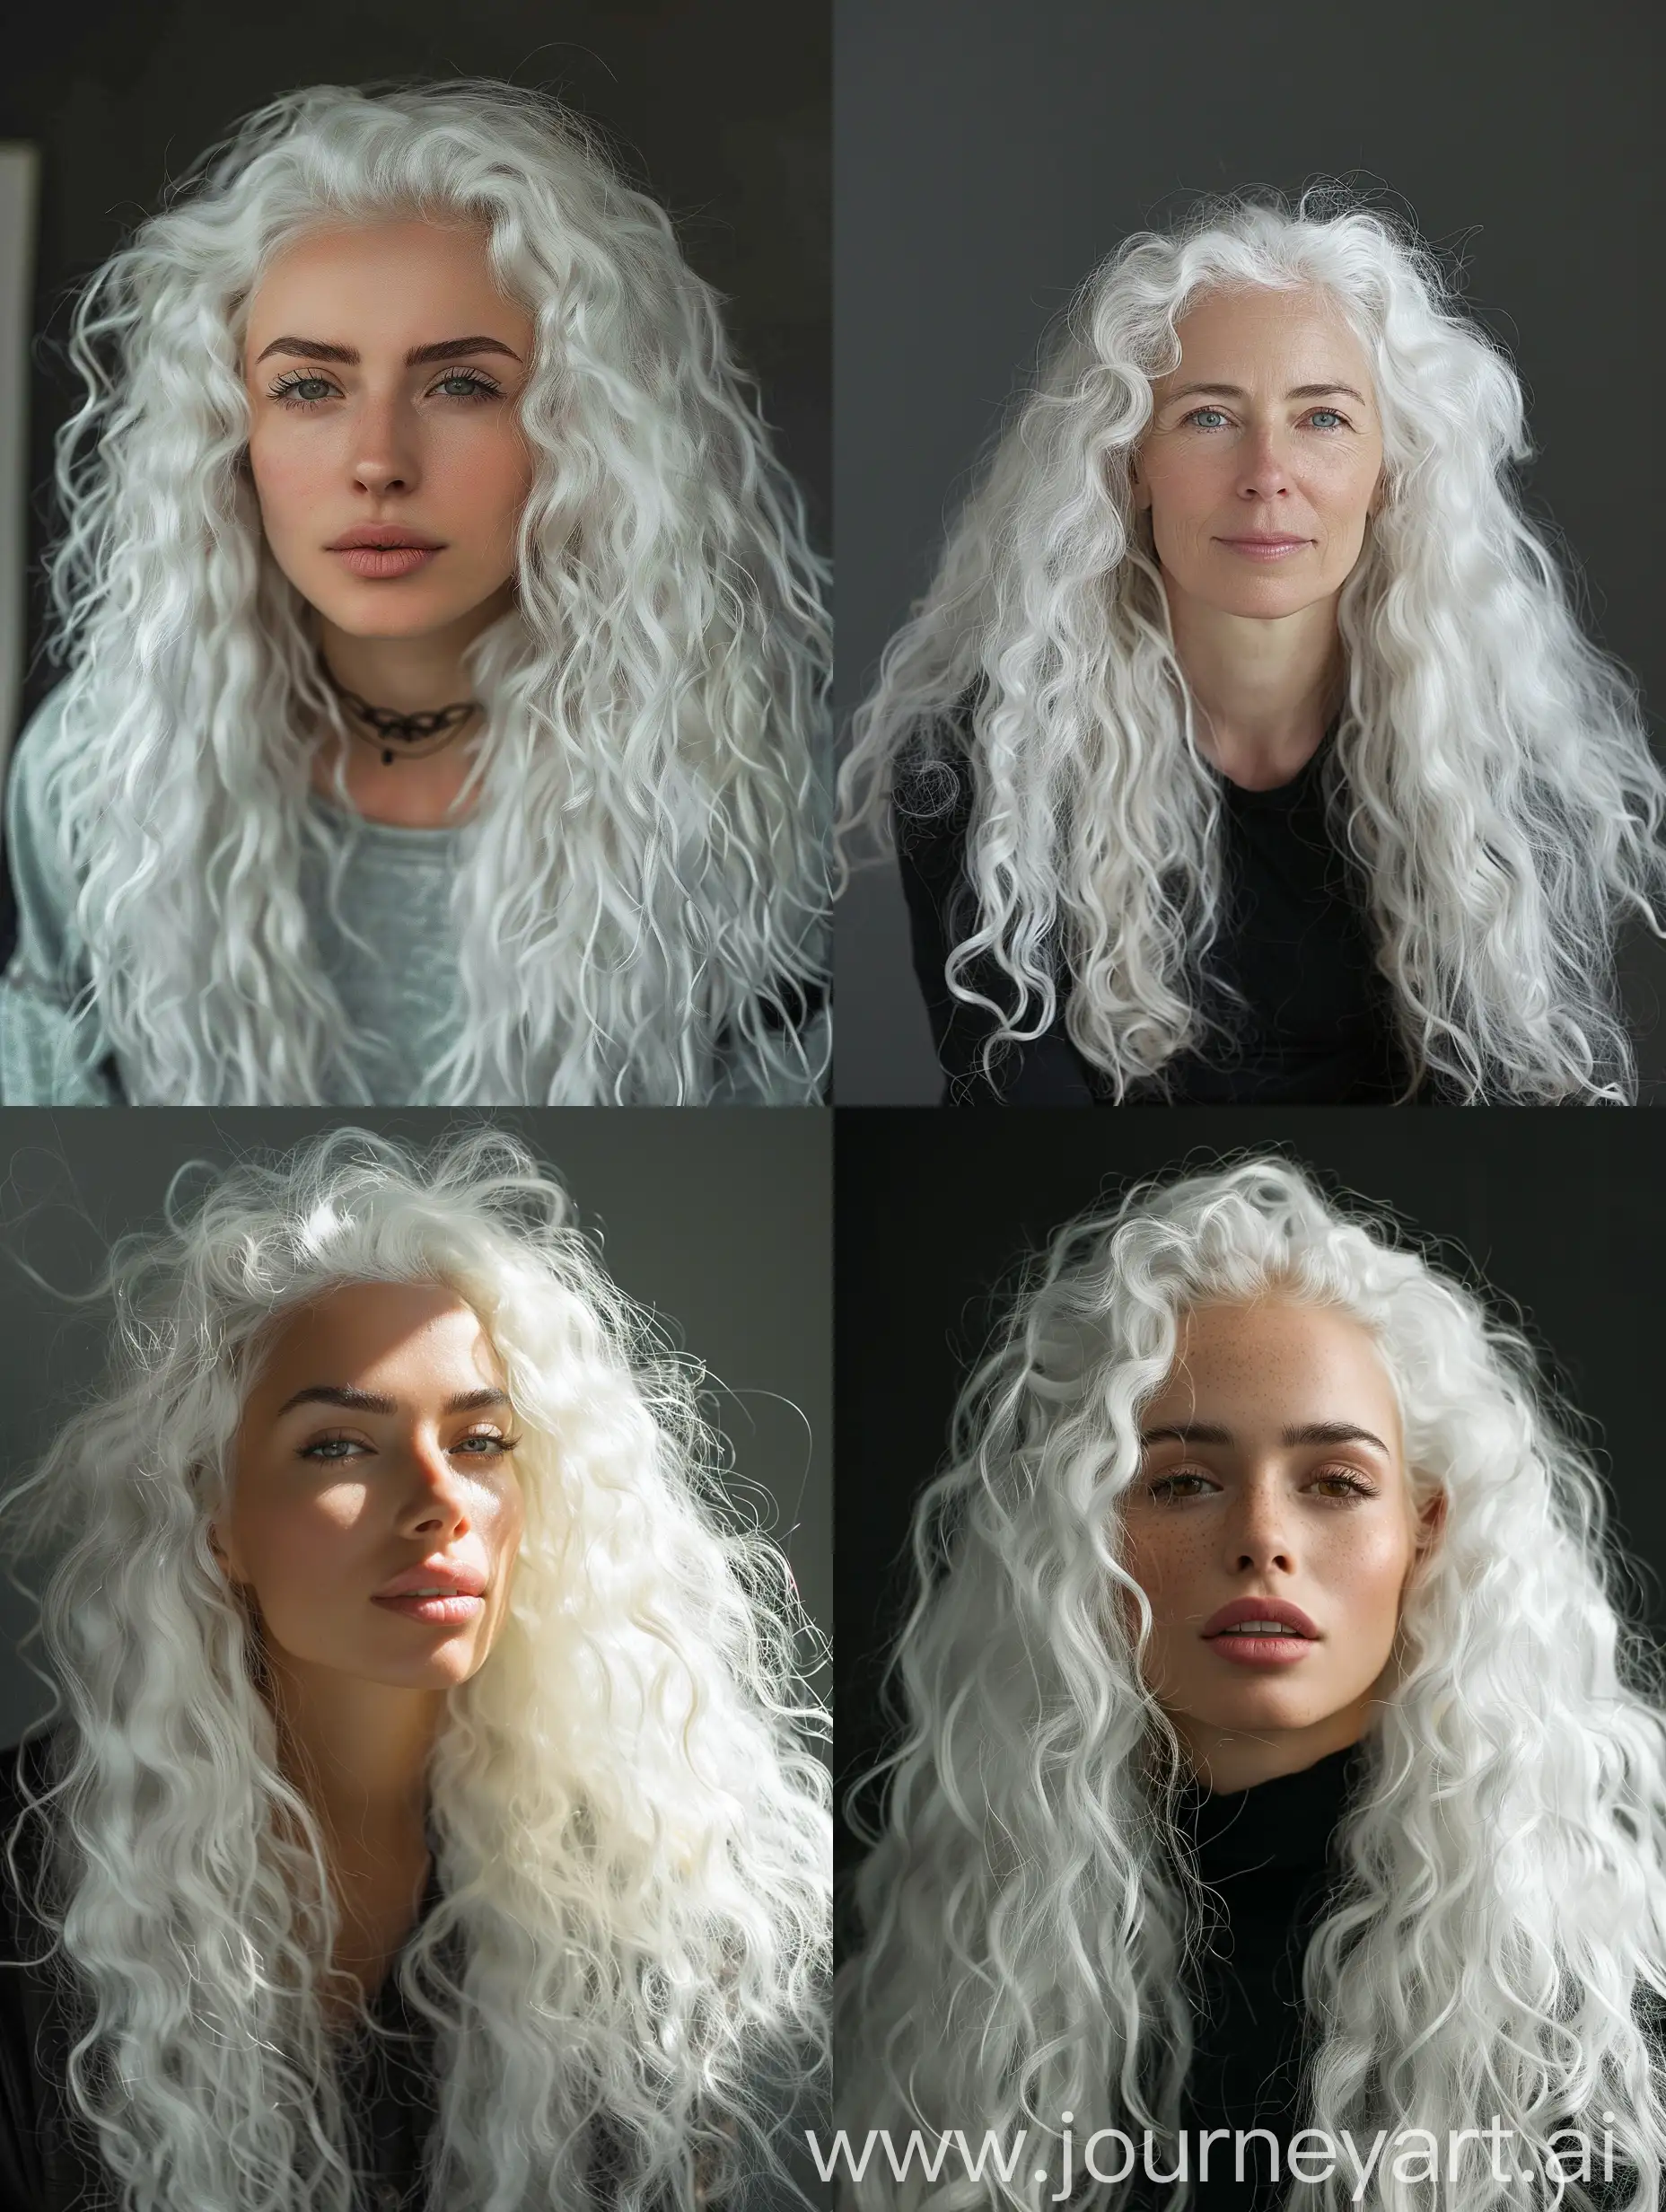 Elegant-WhiteHaired-Woman-in-Captivating-FrontLit-Portrait